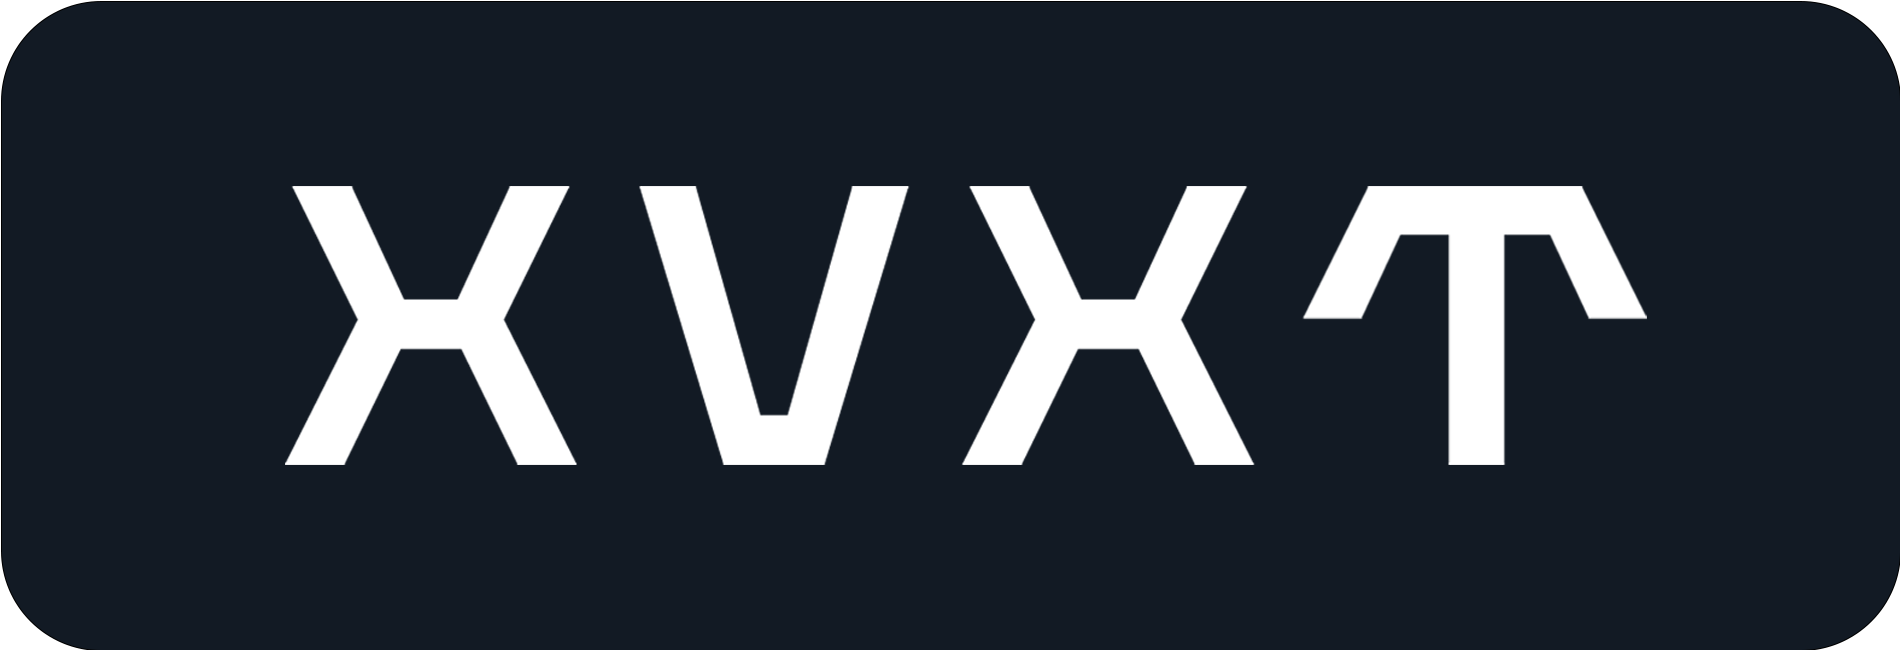 XVXT